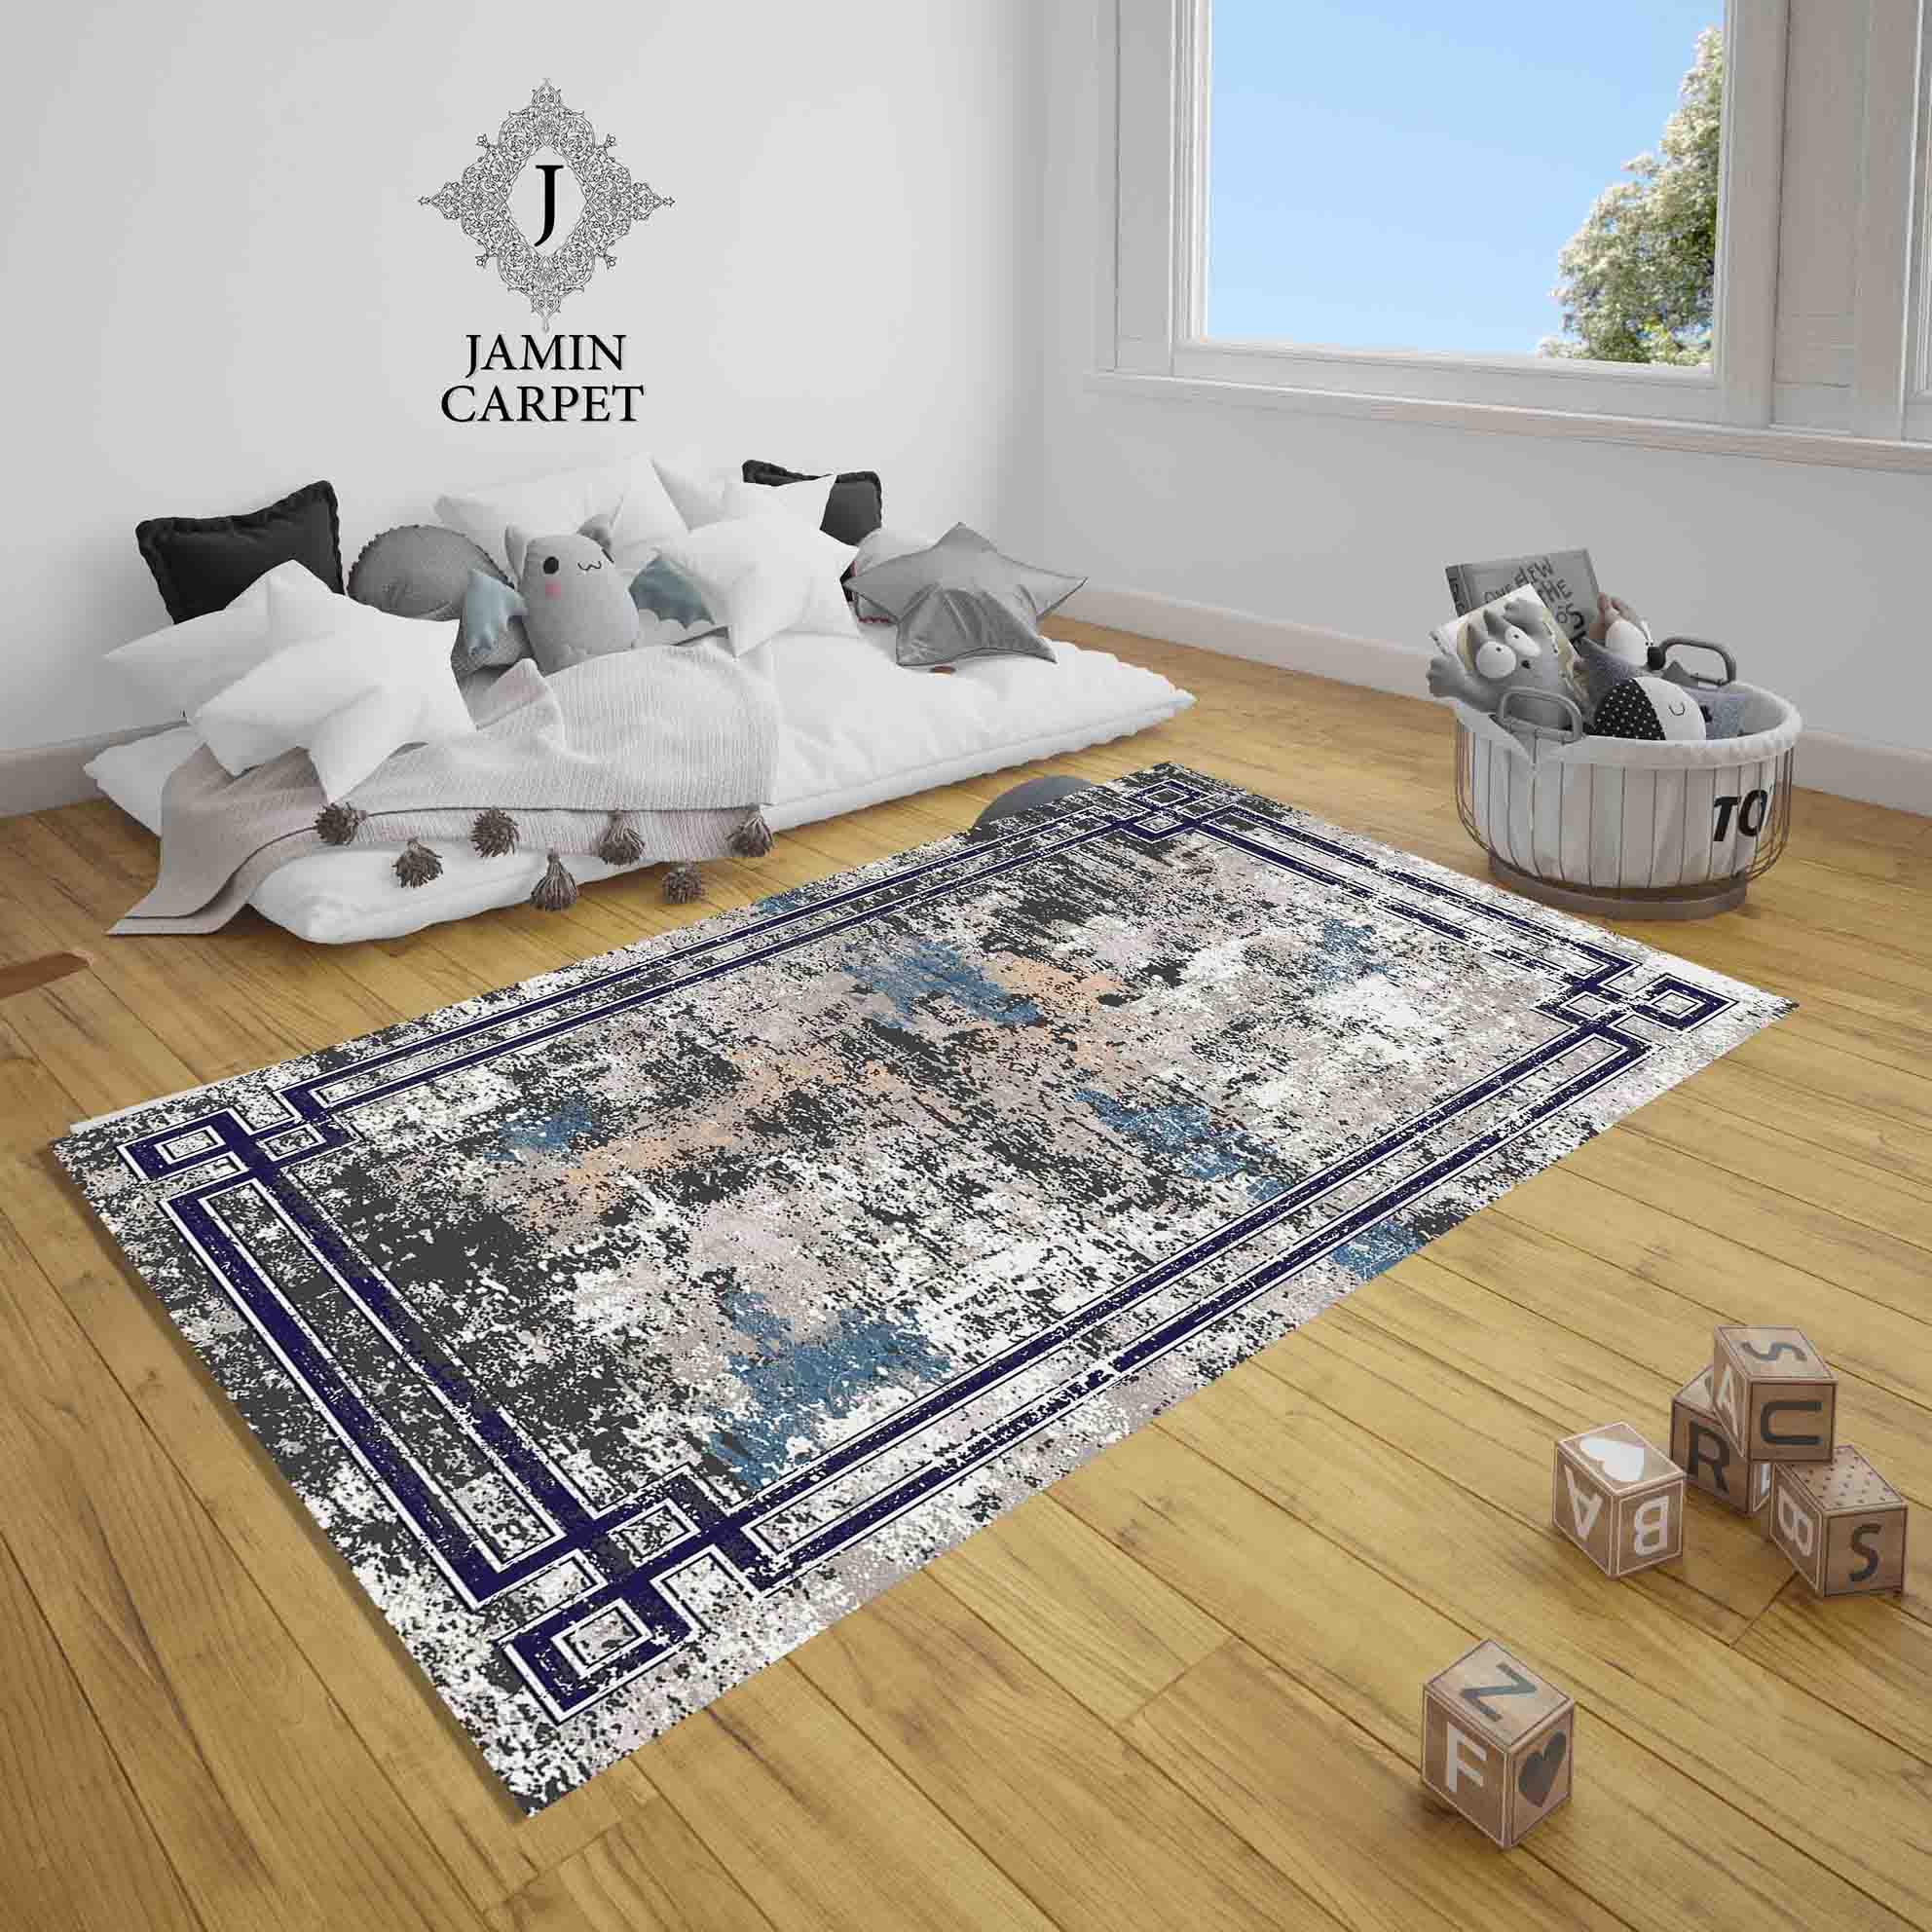 Fantasy carpet code 262 comb 400 density 1800 all acrylic